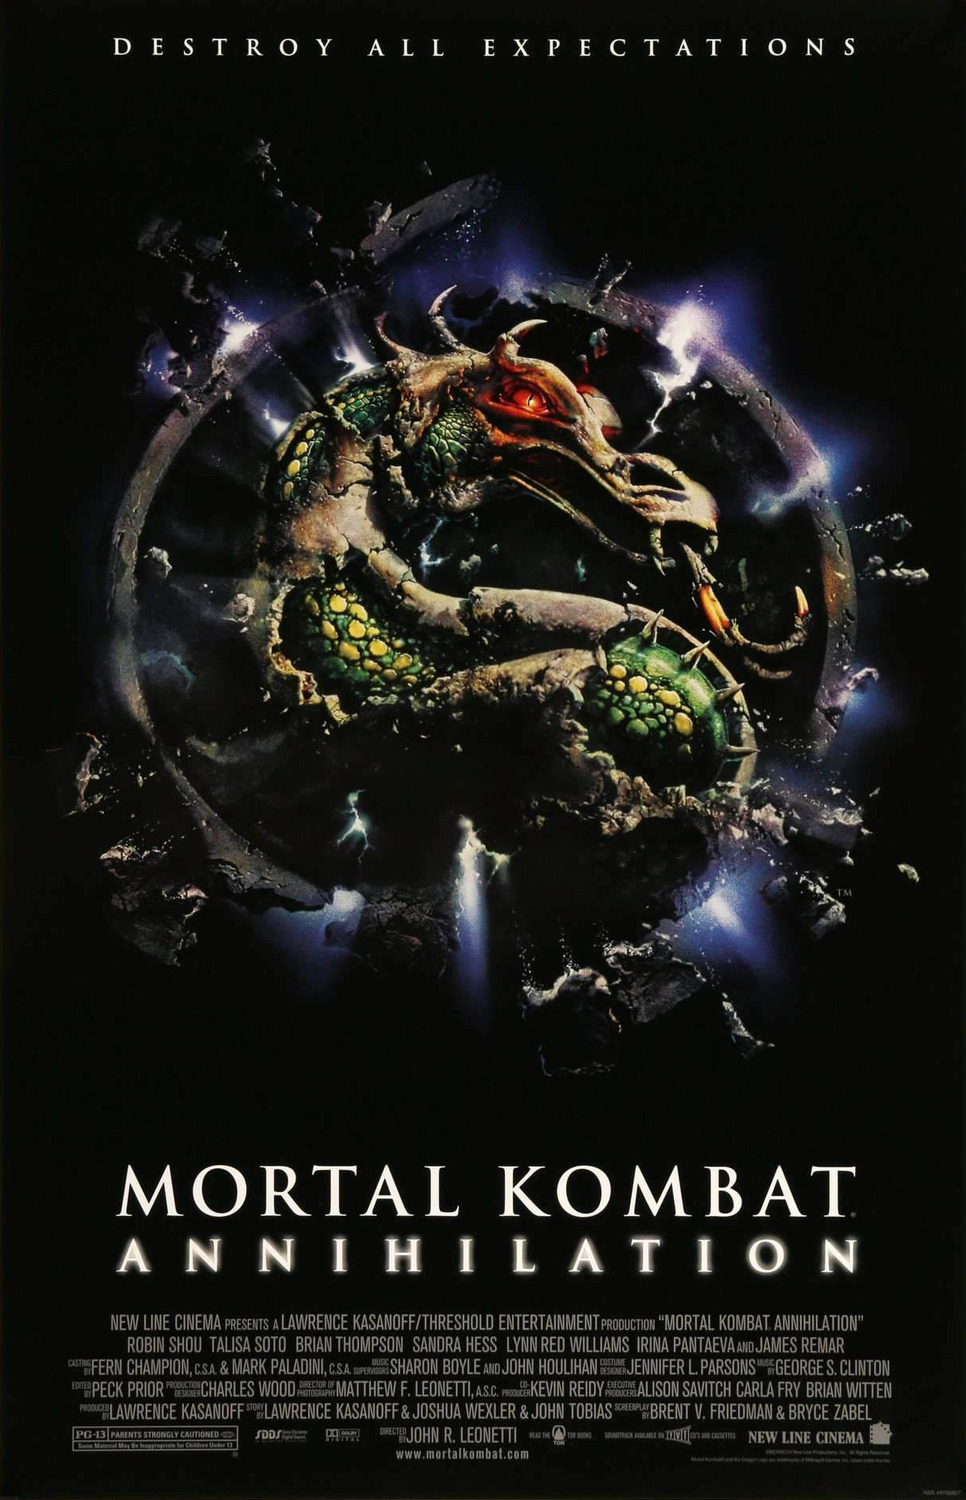 Extra Large Movie Poster Image for Mortal Kombat Annihilation (#2 of 2)